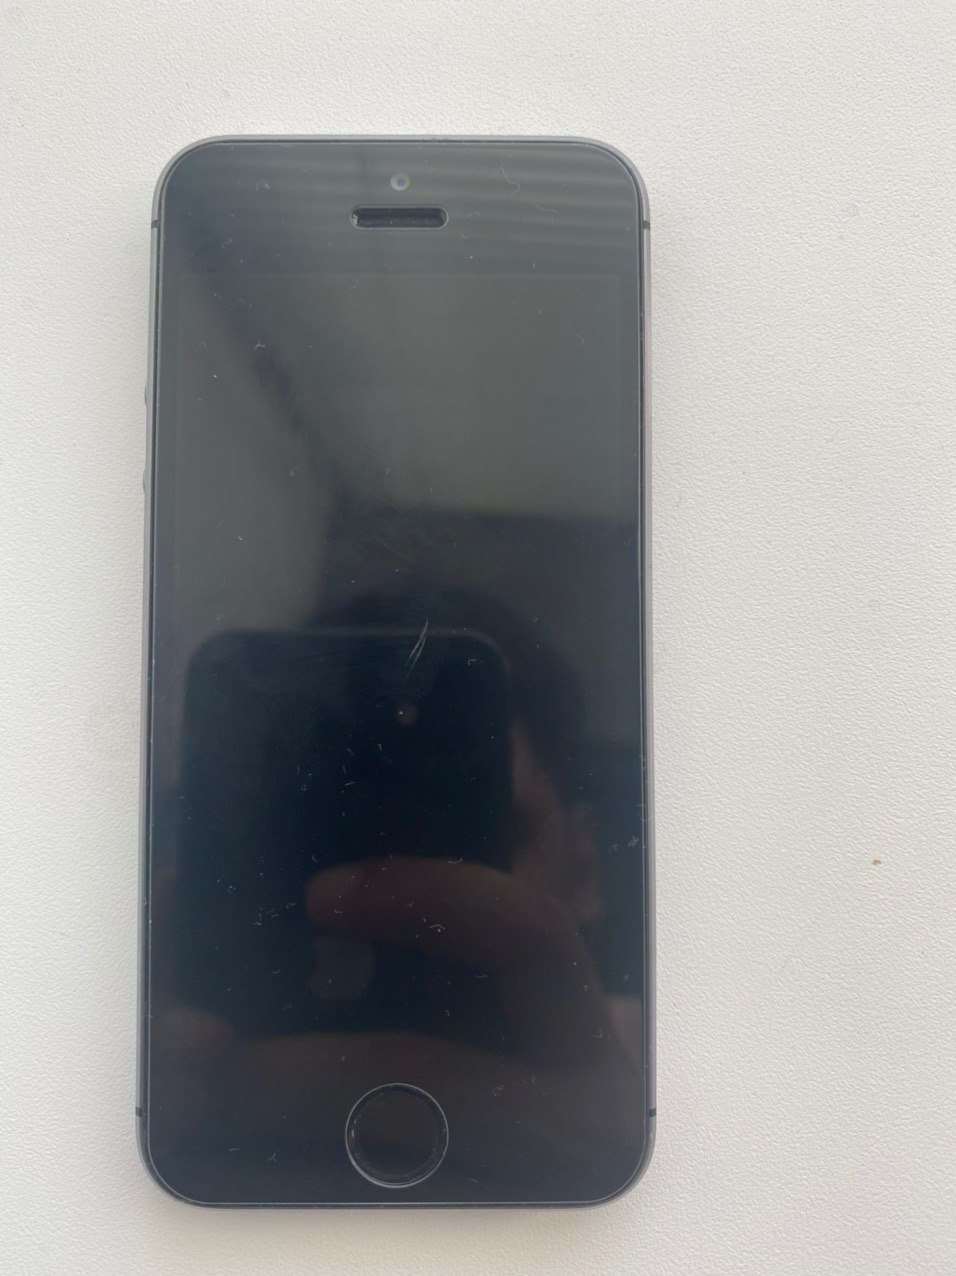 Apple iPhone 5S 16Gb Space Gray 0